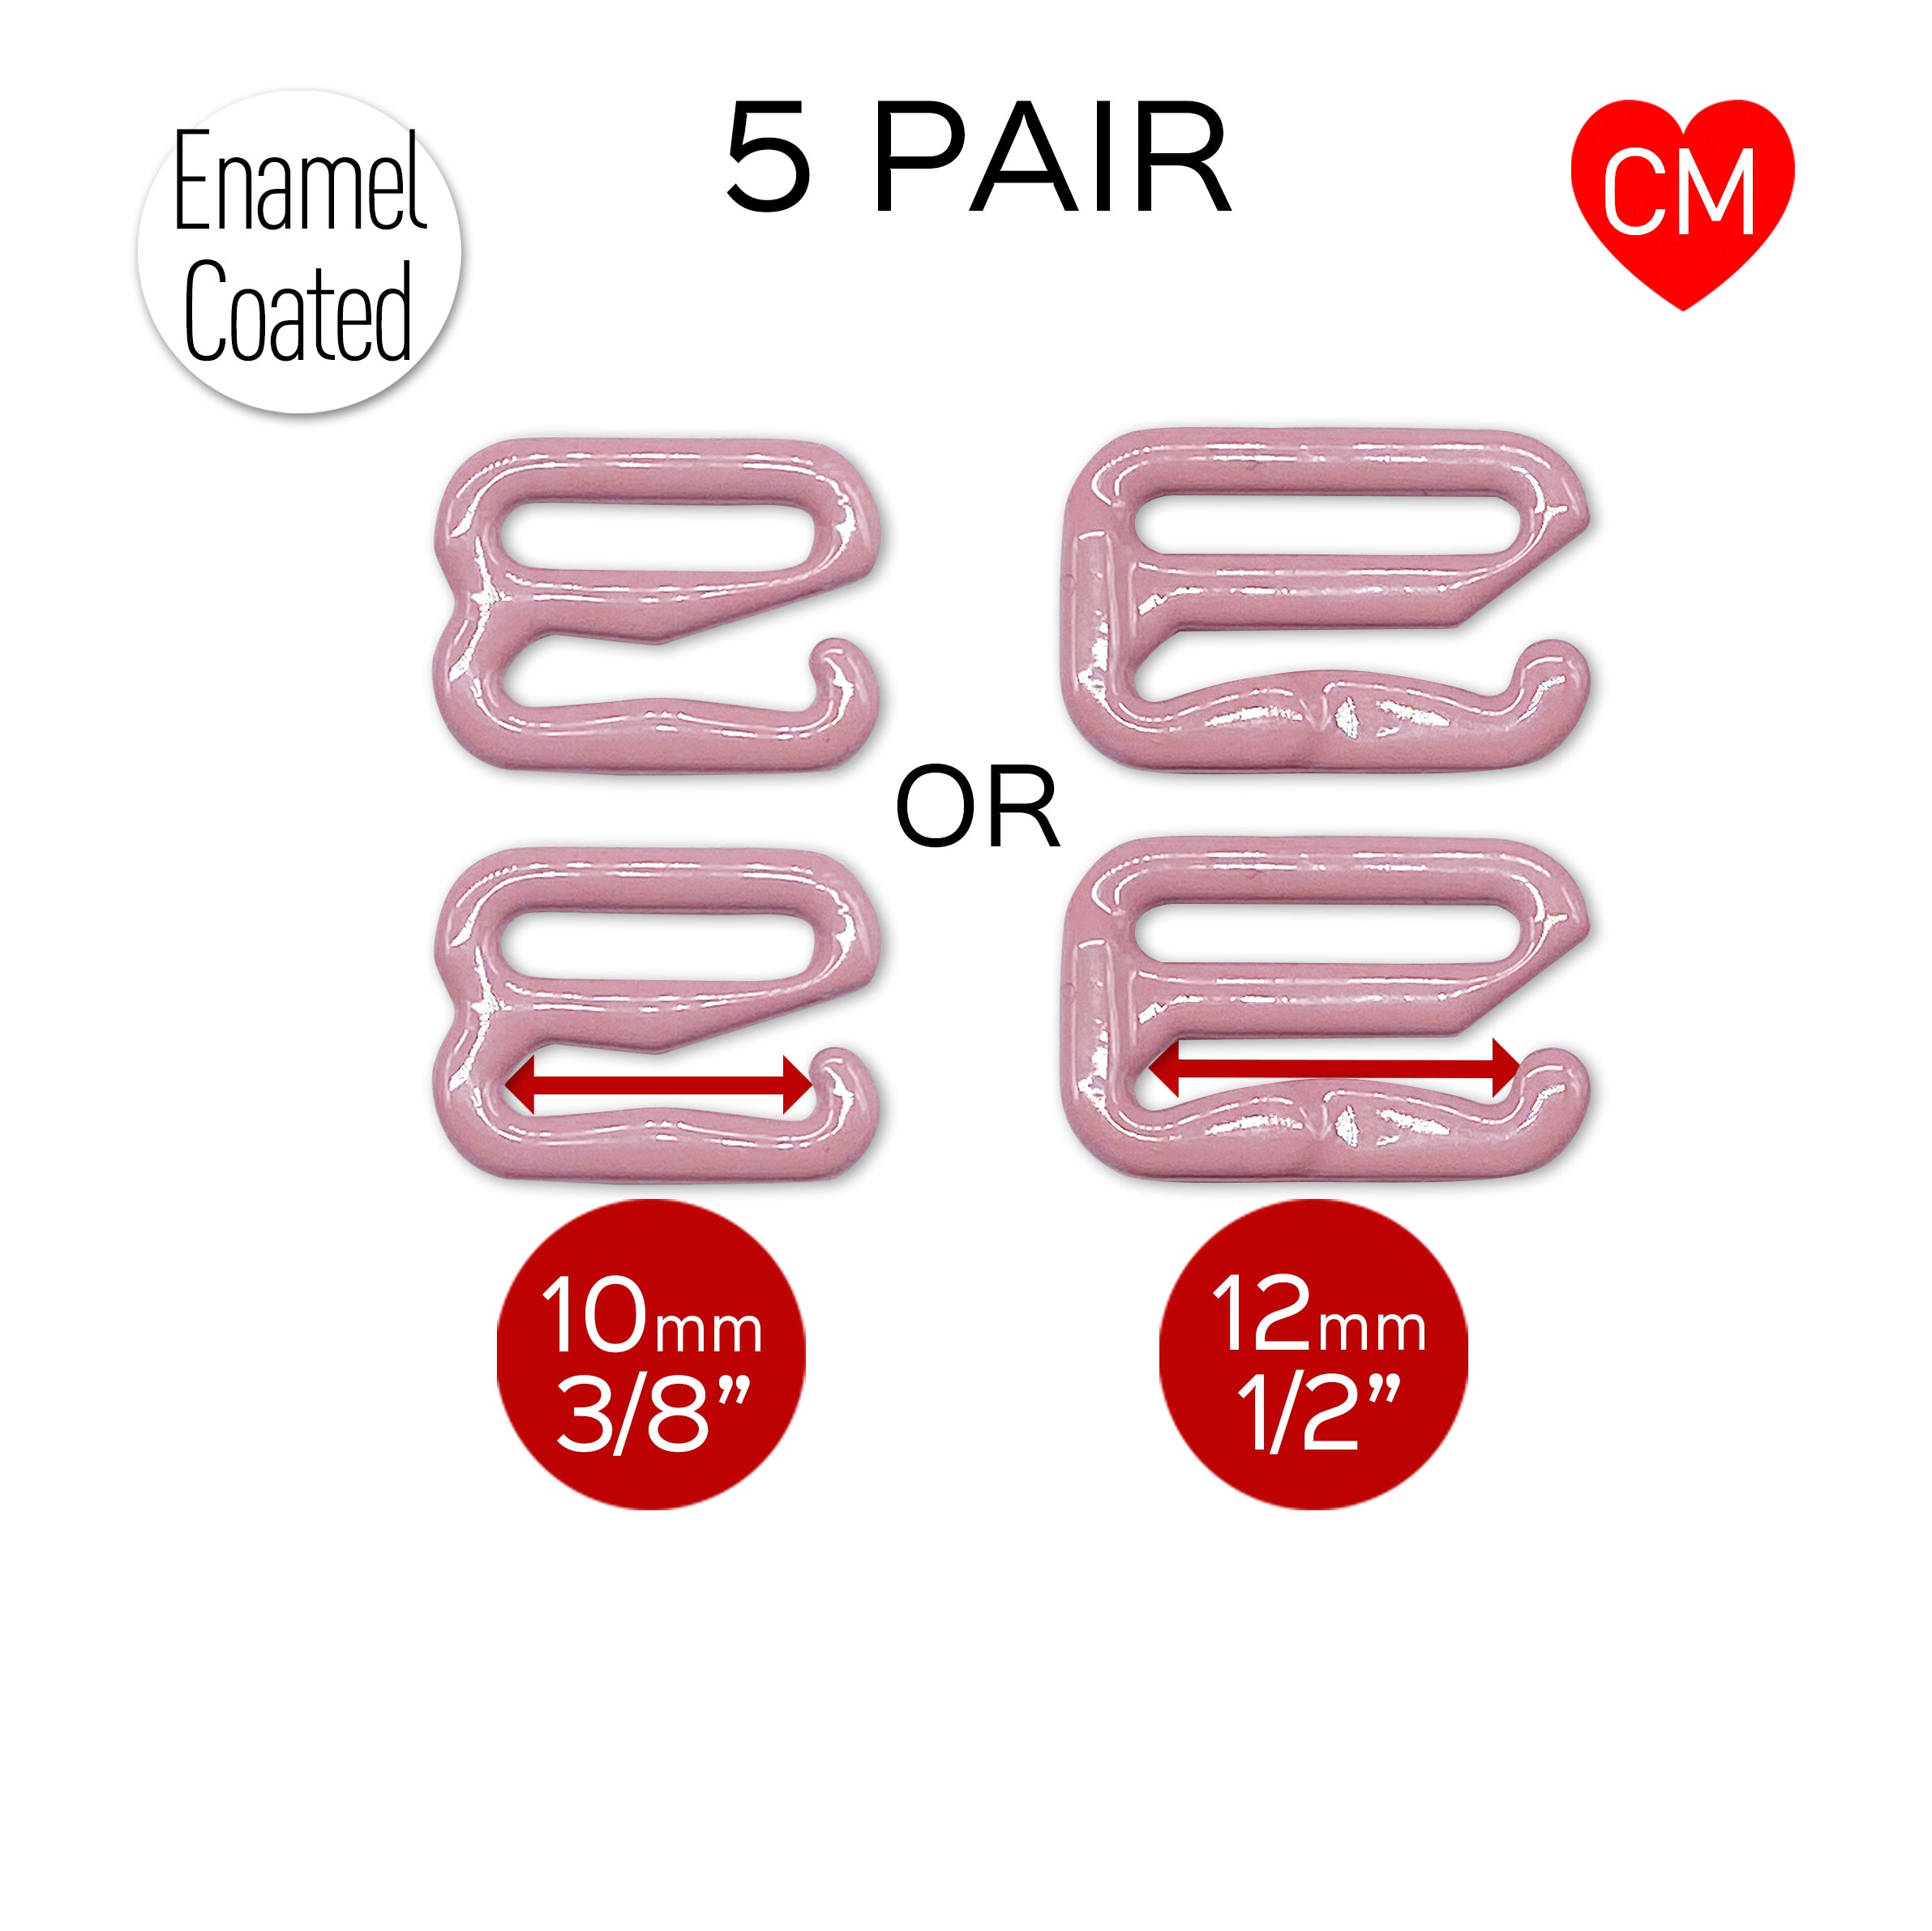 CLEARANCE- 5 Pair of Bra Strap Slider G Hooks in Enamel Coated Dusty Pink for Swimwear or Bra making- 3/8" or 1/2"